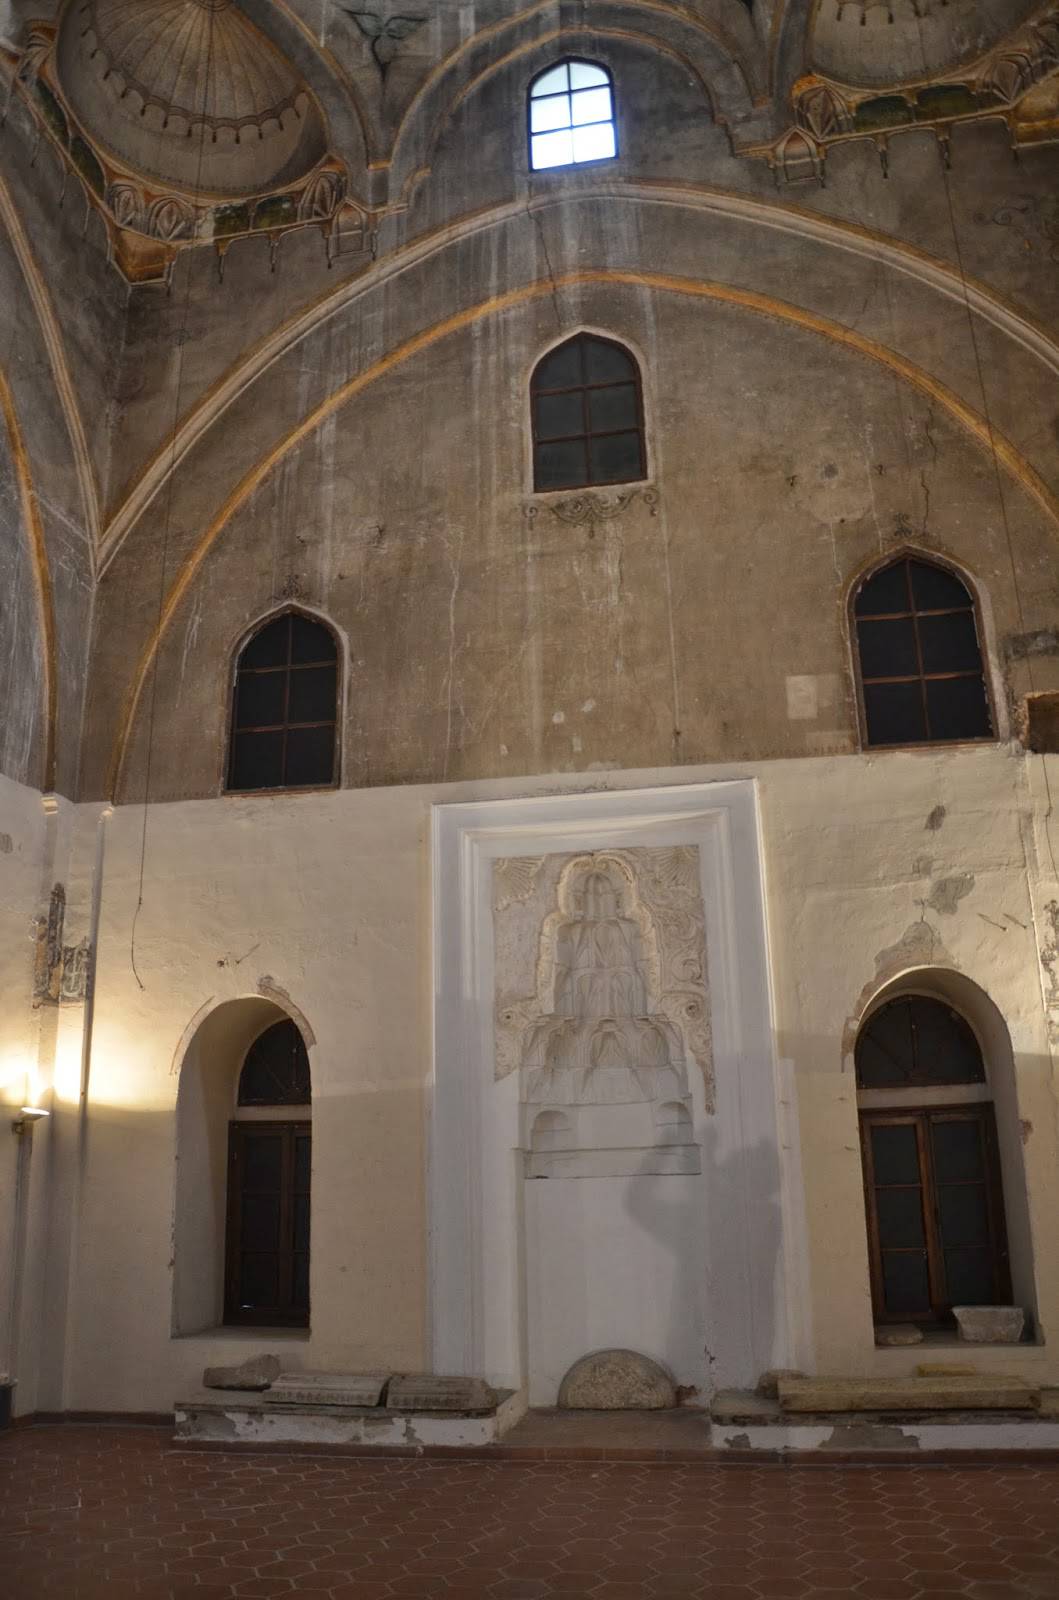 Prayer hall of the Alaca Imaret Mosque in Thessaloniki, Greece